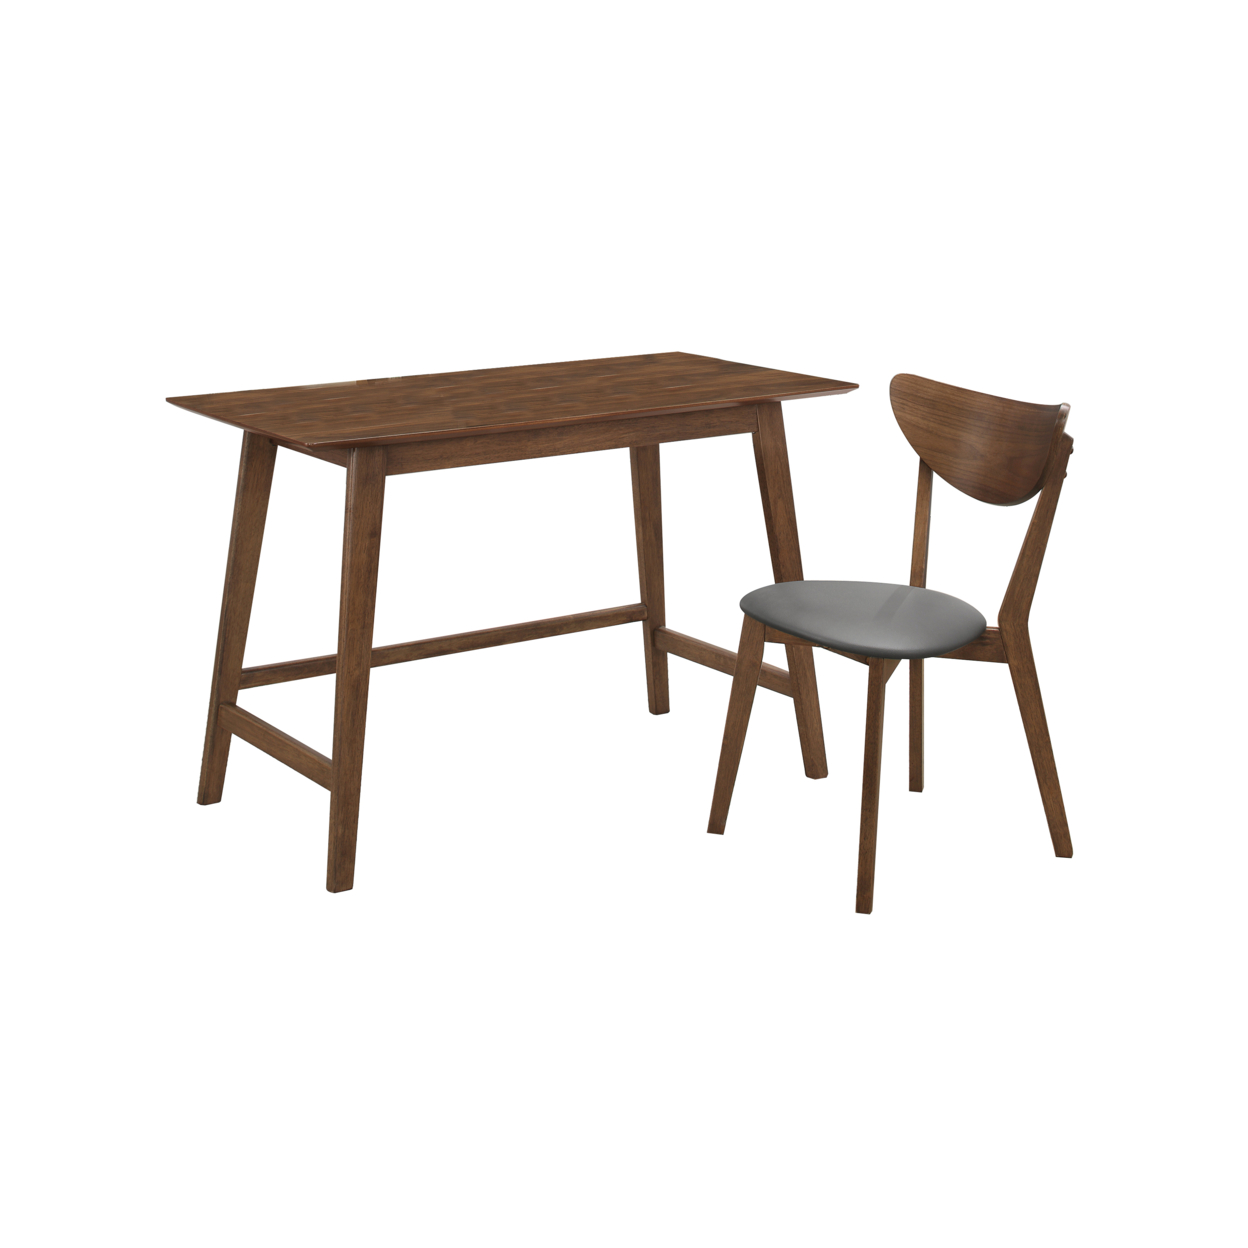 2 Piece Wooden Writing Desk Set With Padded Seat, Brown- Saltoro Sherpi